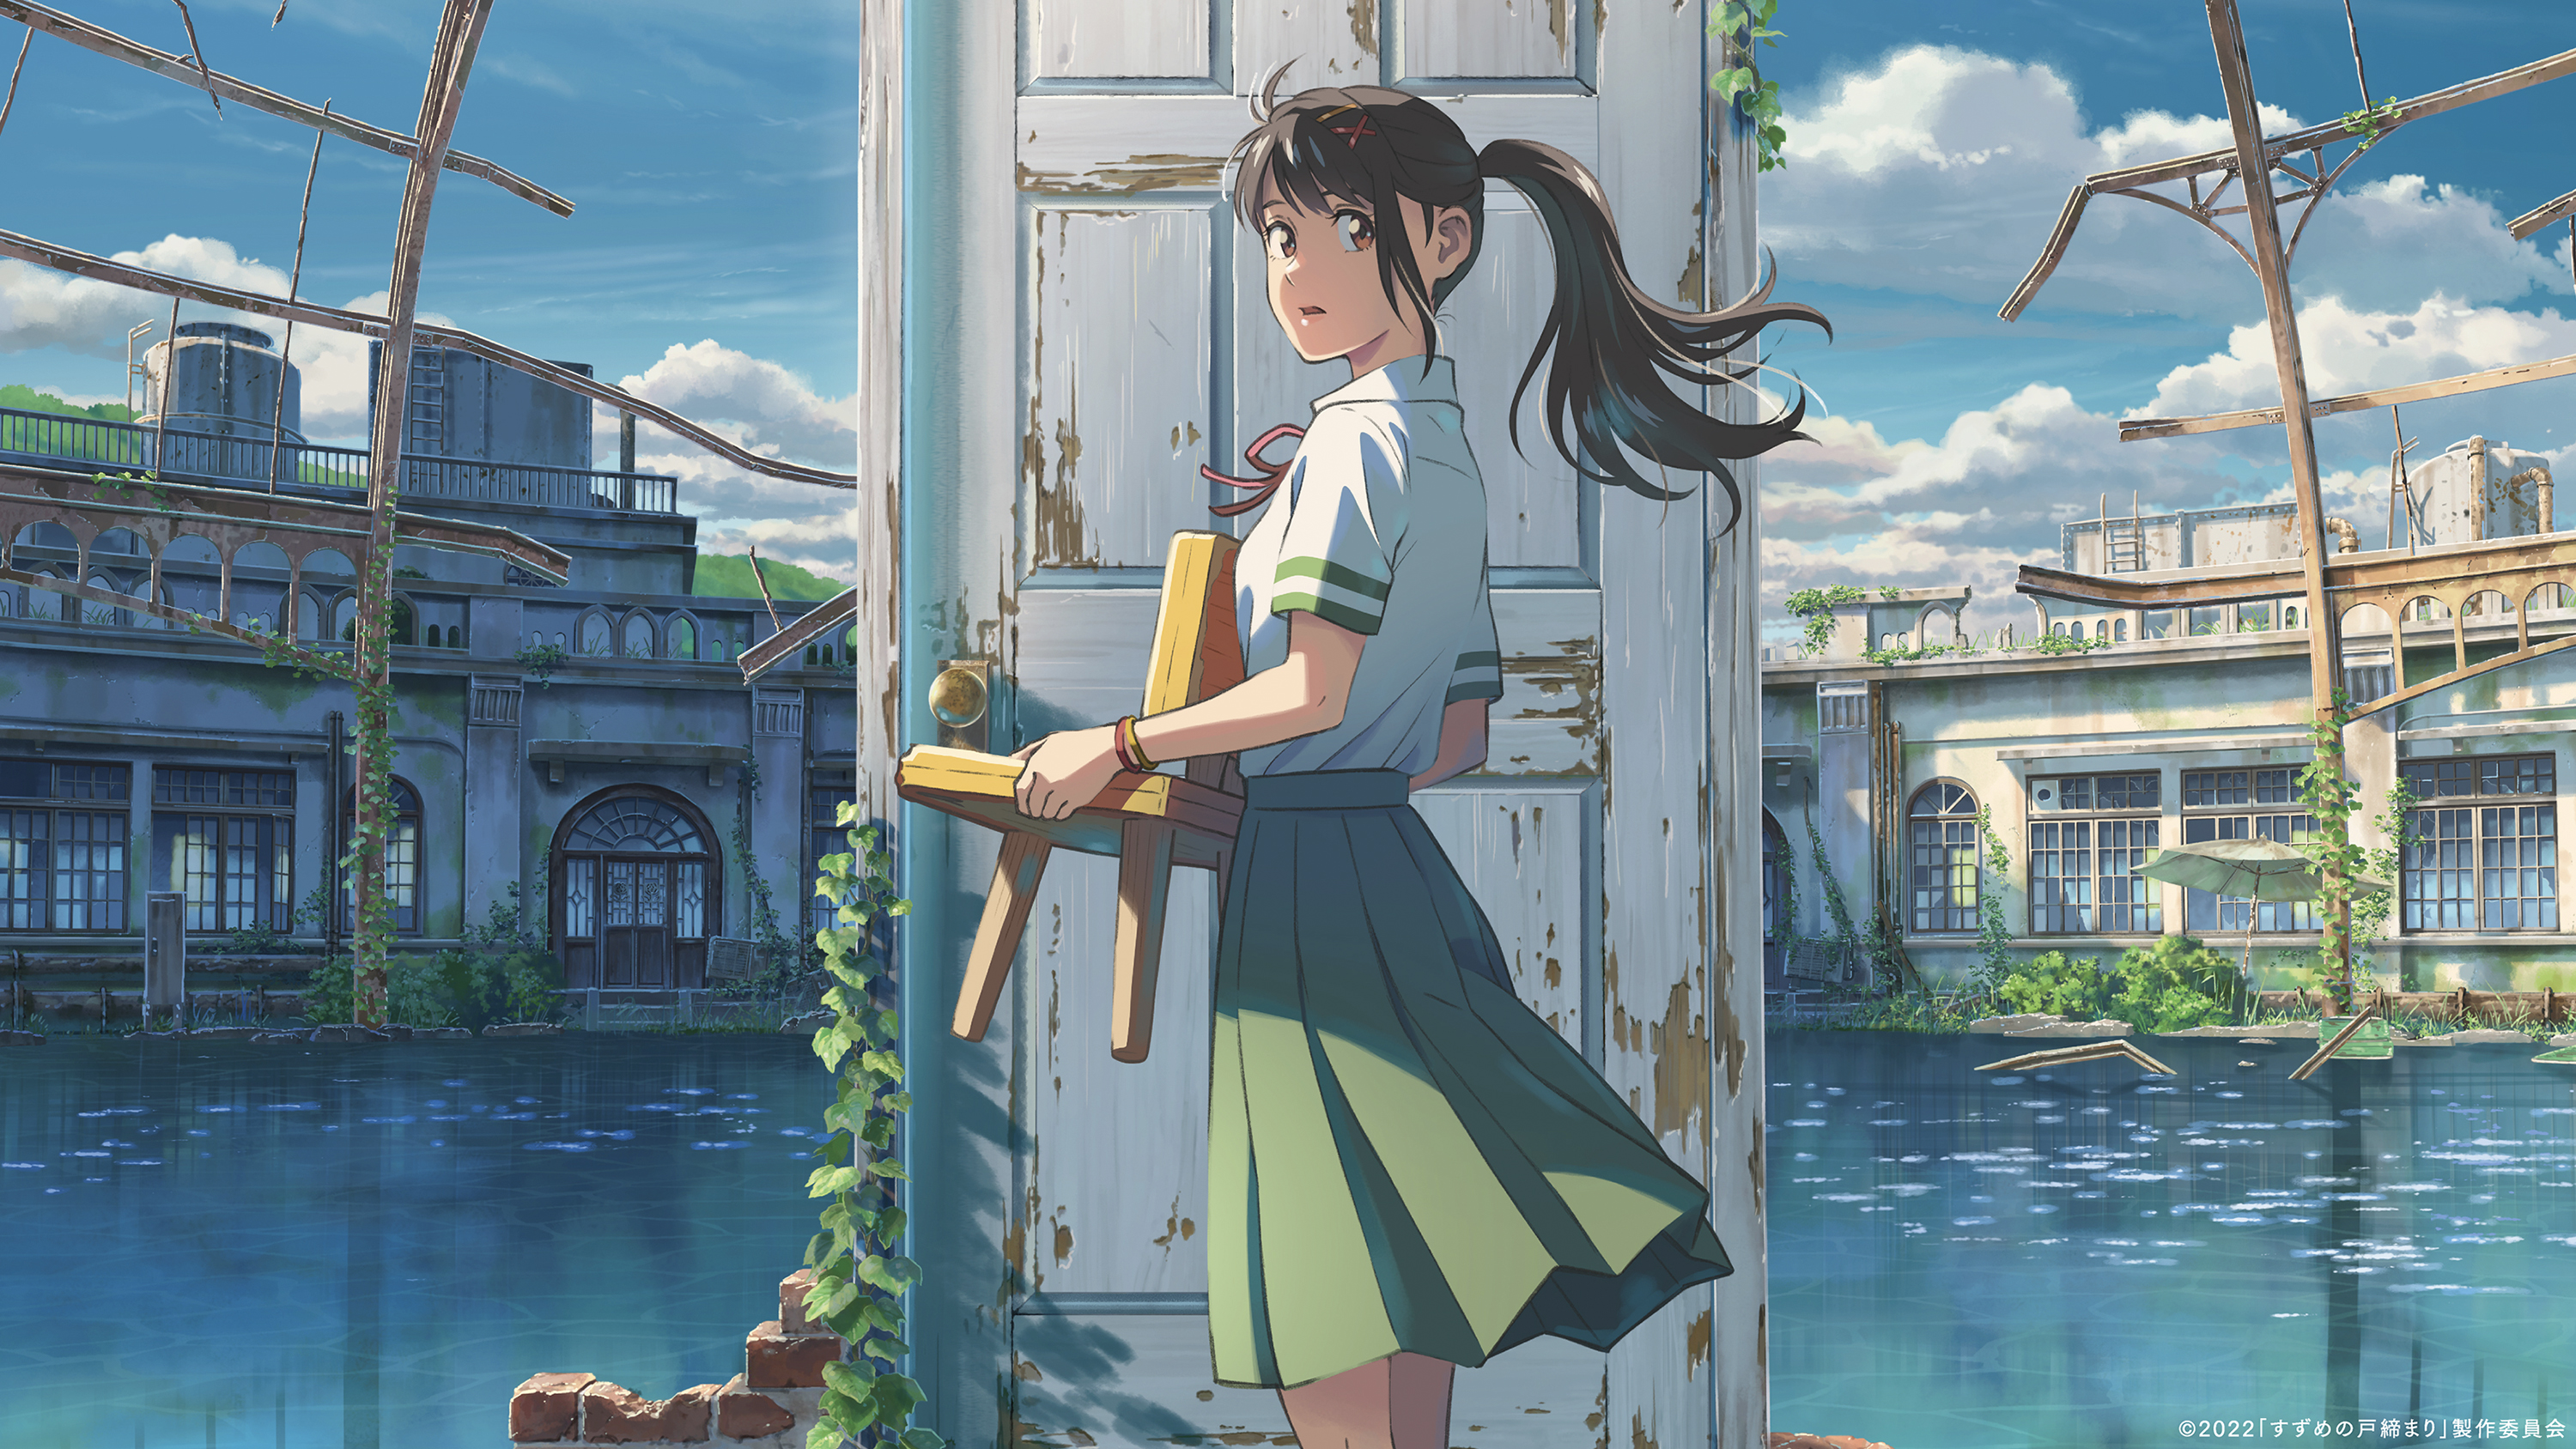 Spiritual Anime Girl by Breberton on DeviantArt